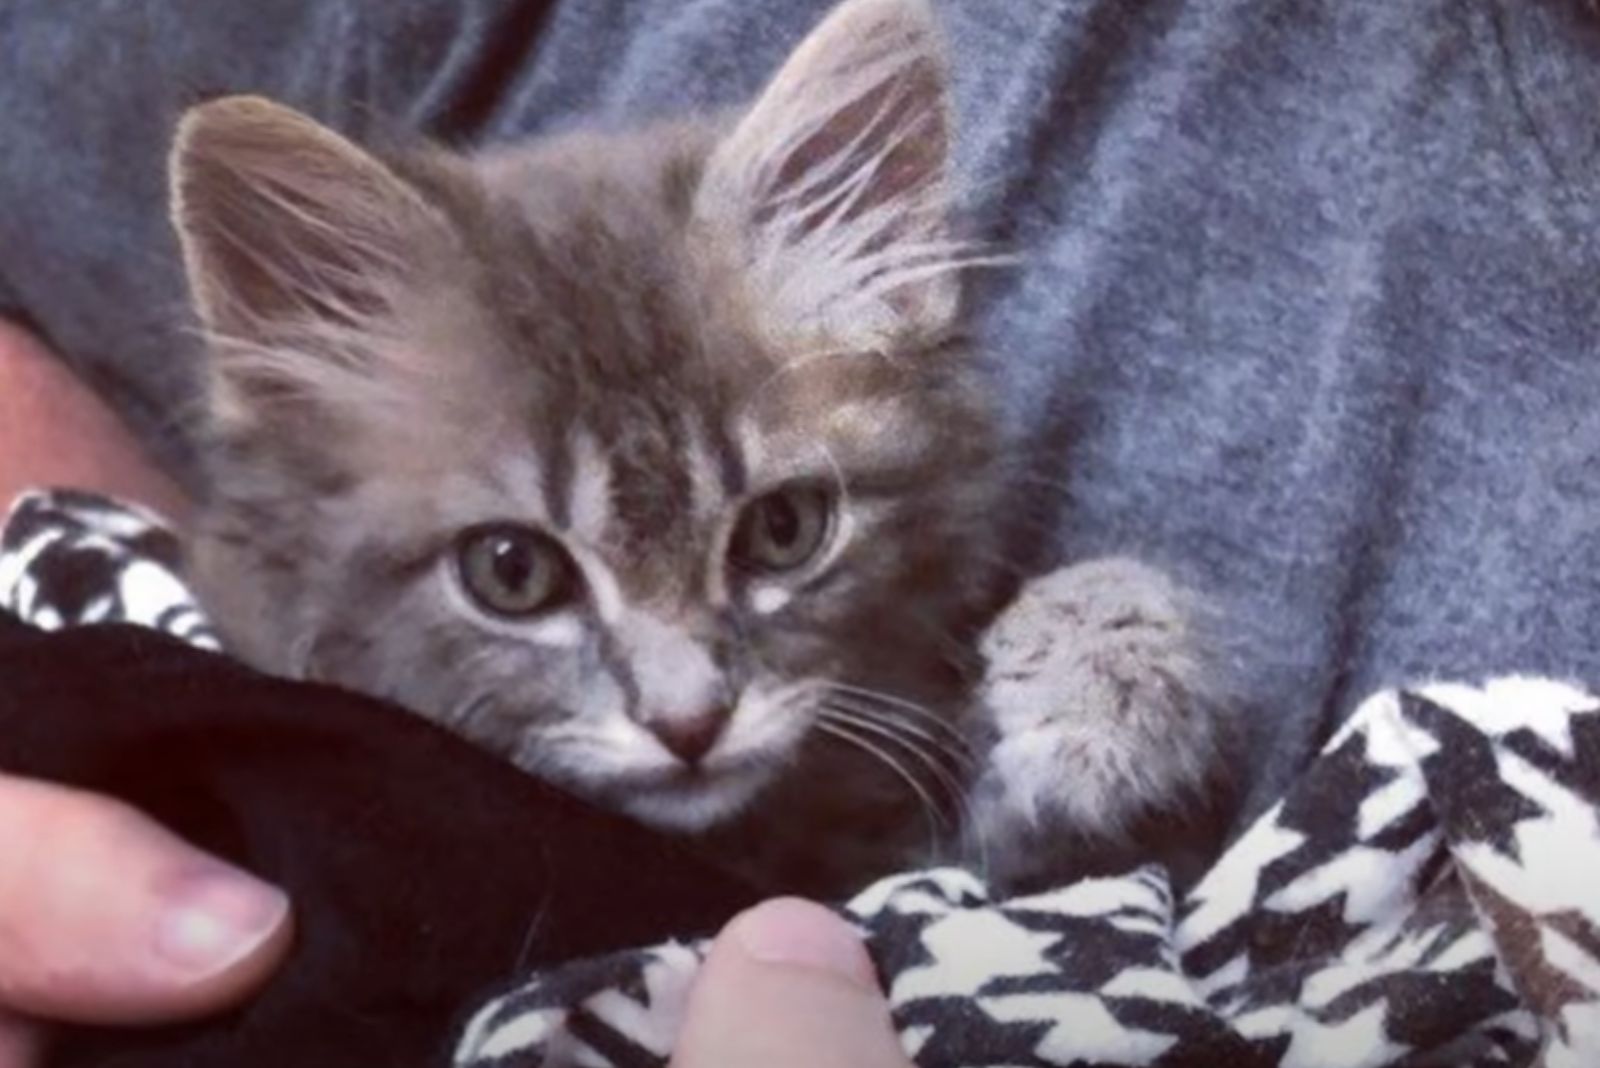 adopted kitten